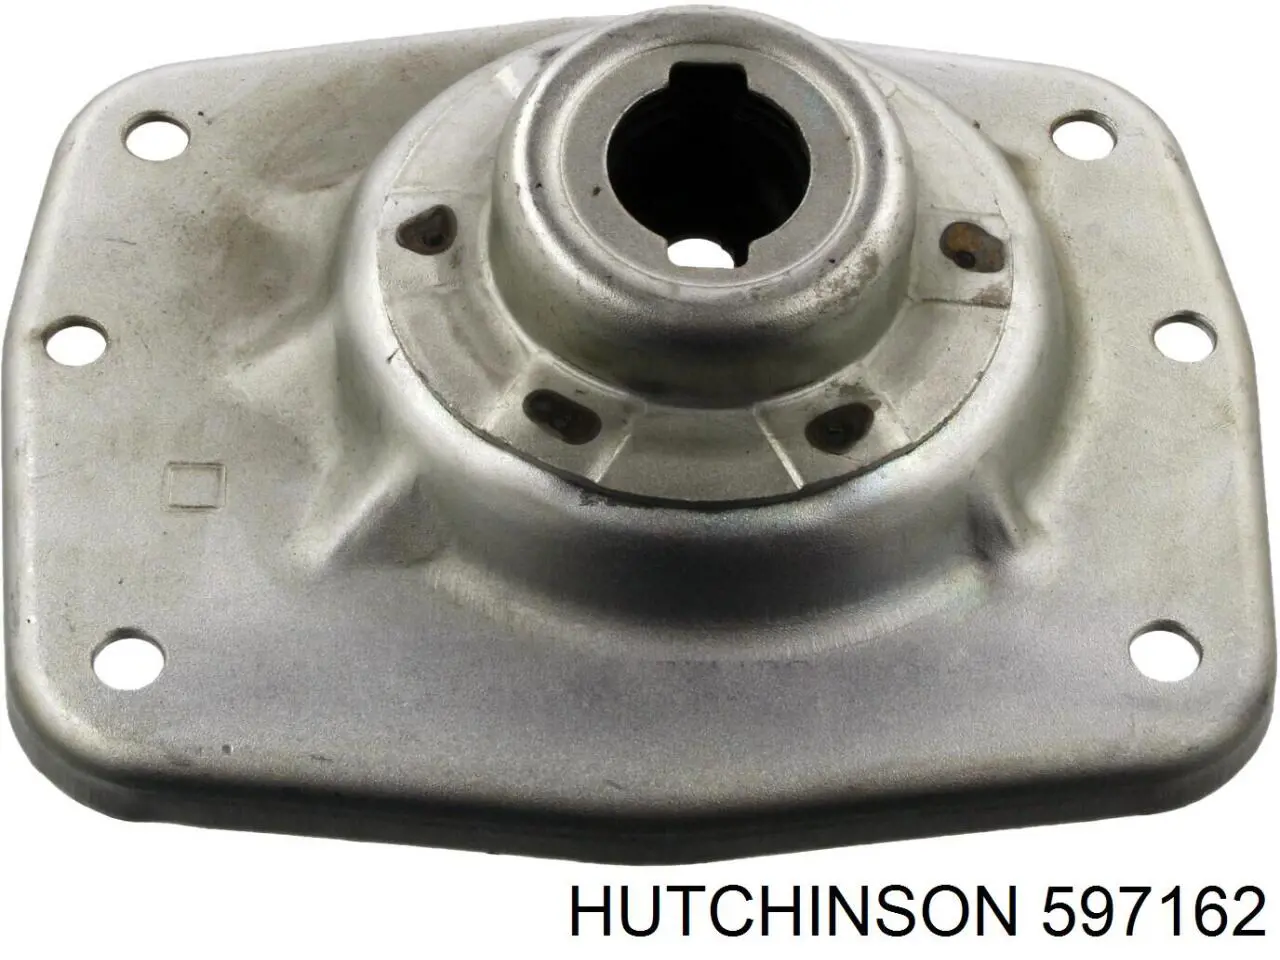 597162 Hutchinson soporte amortiguador delantero izquierdo